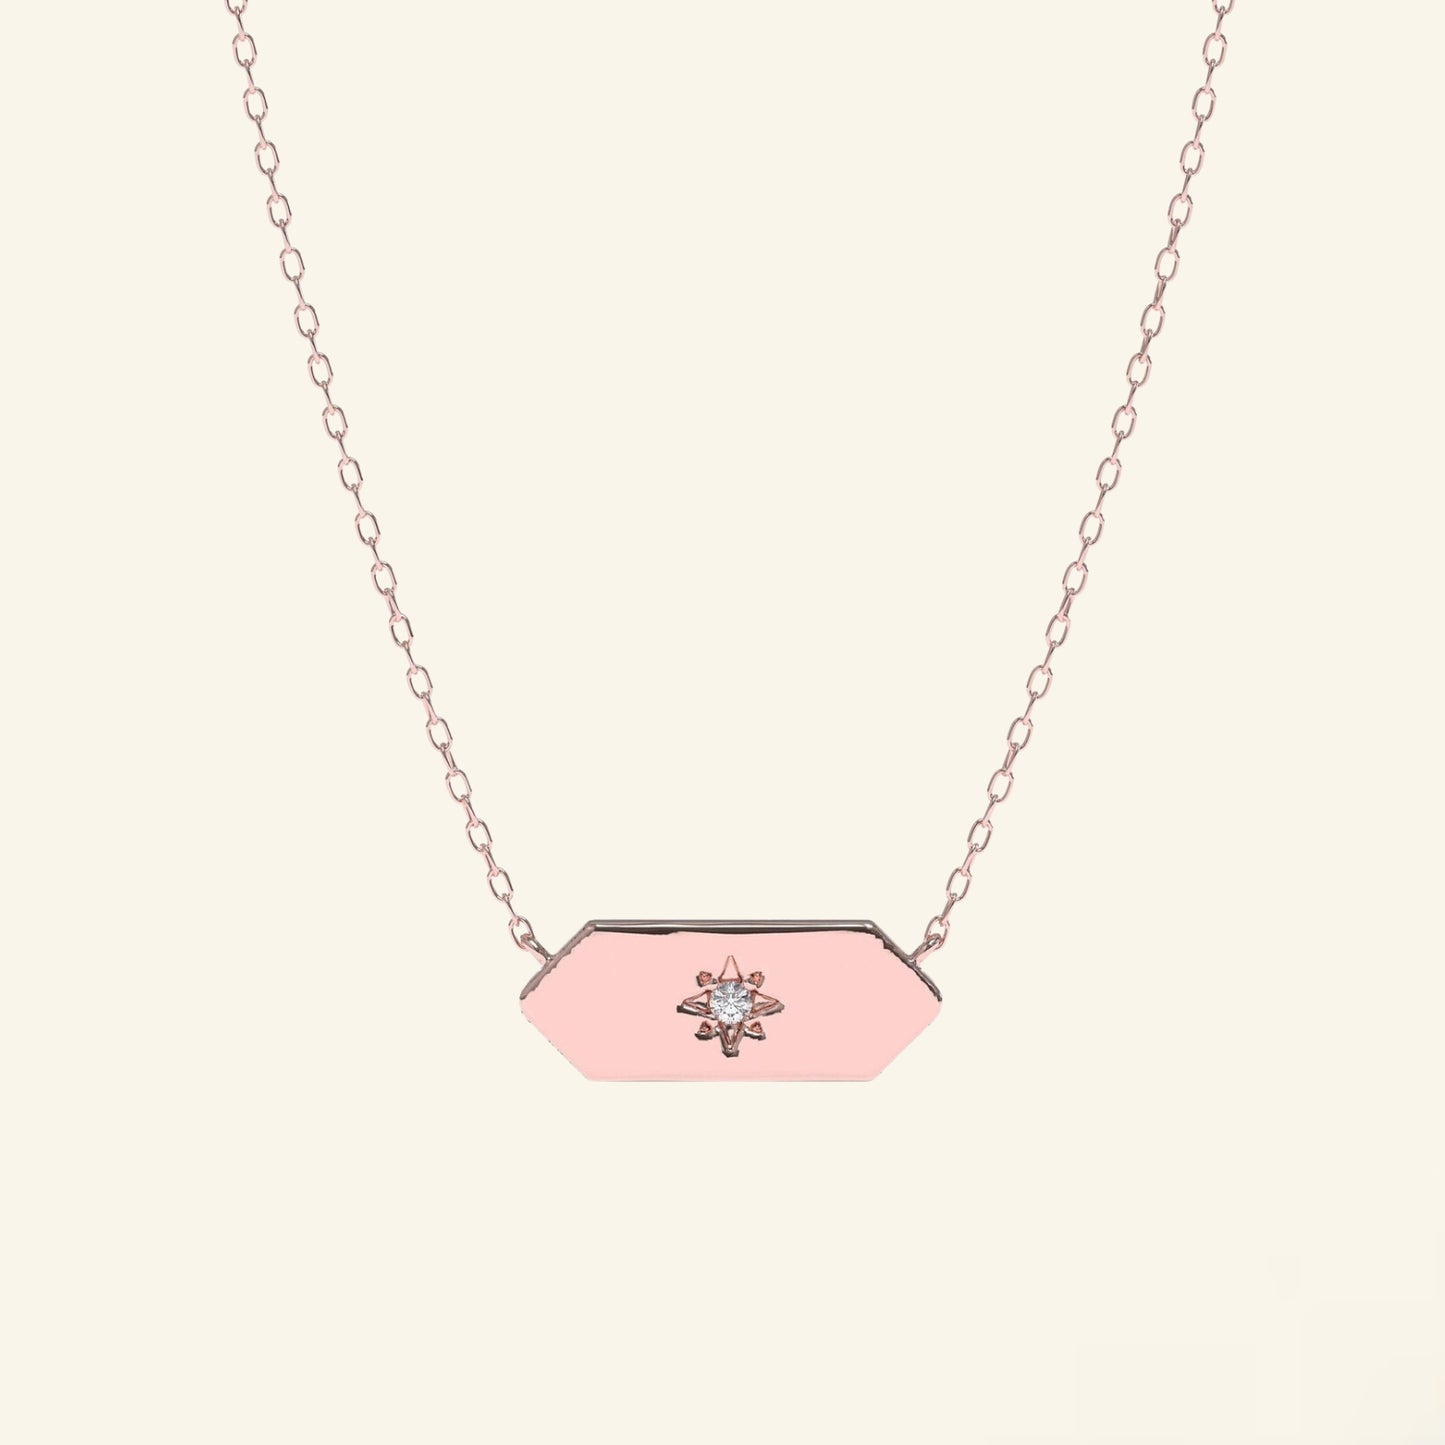 Northern Star Diamond Necklace